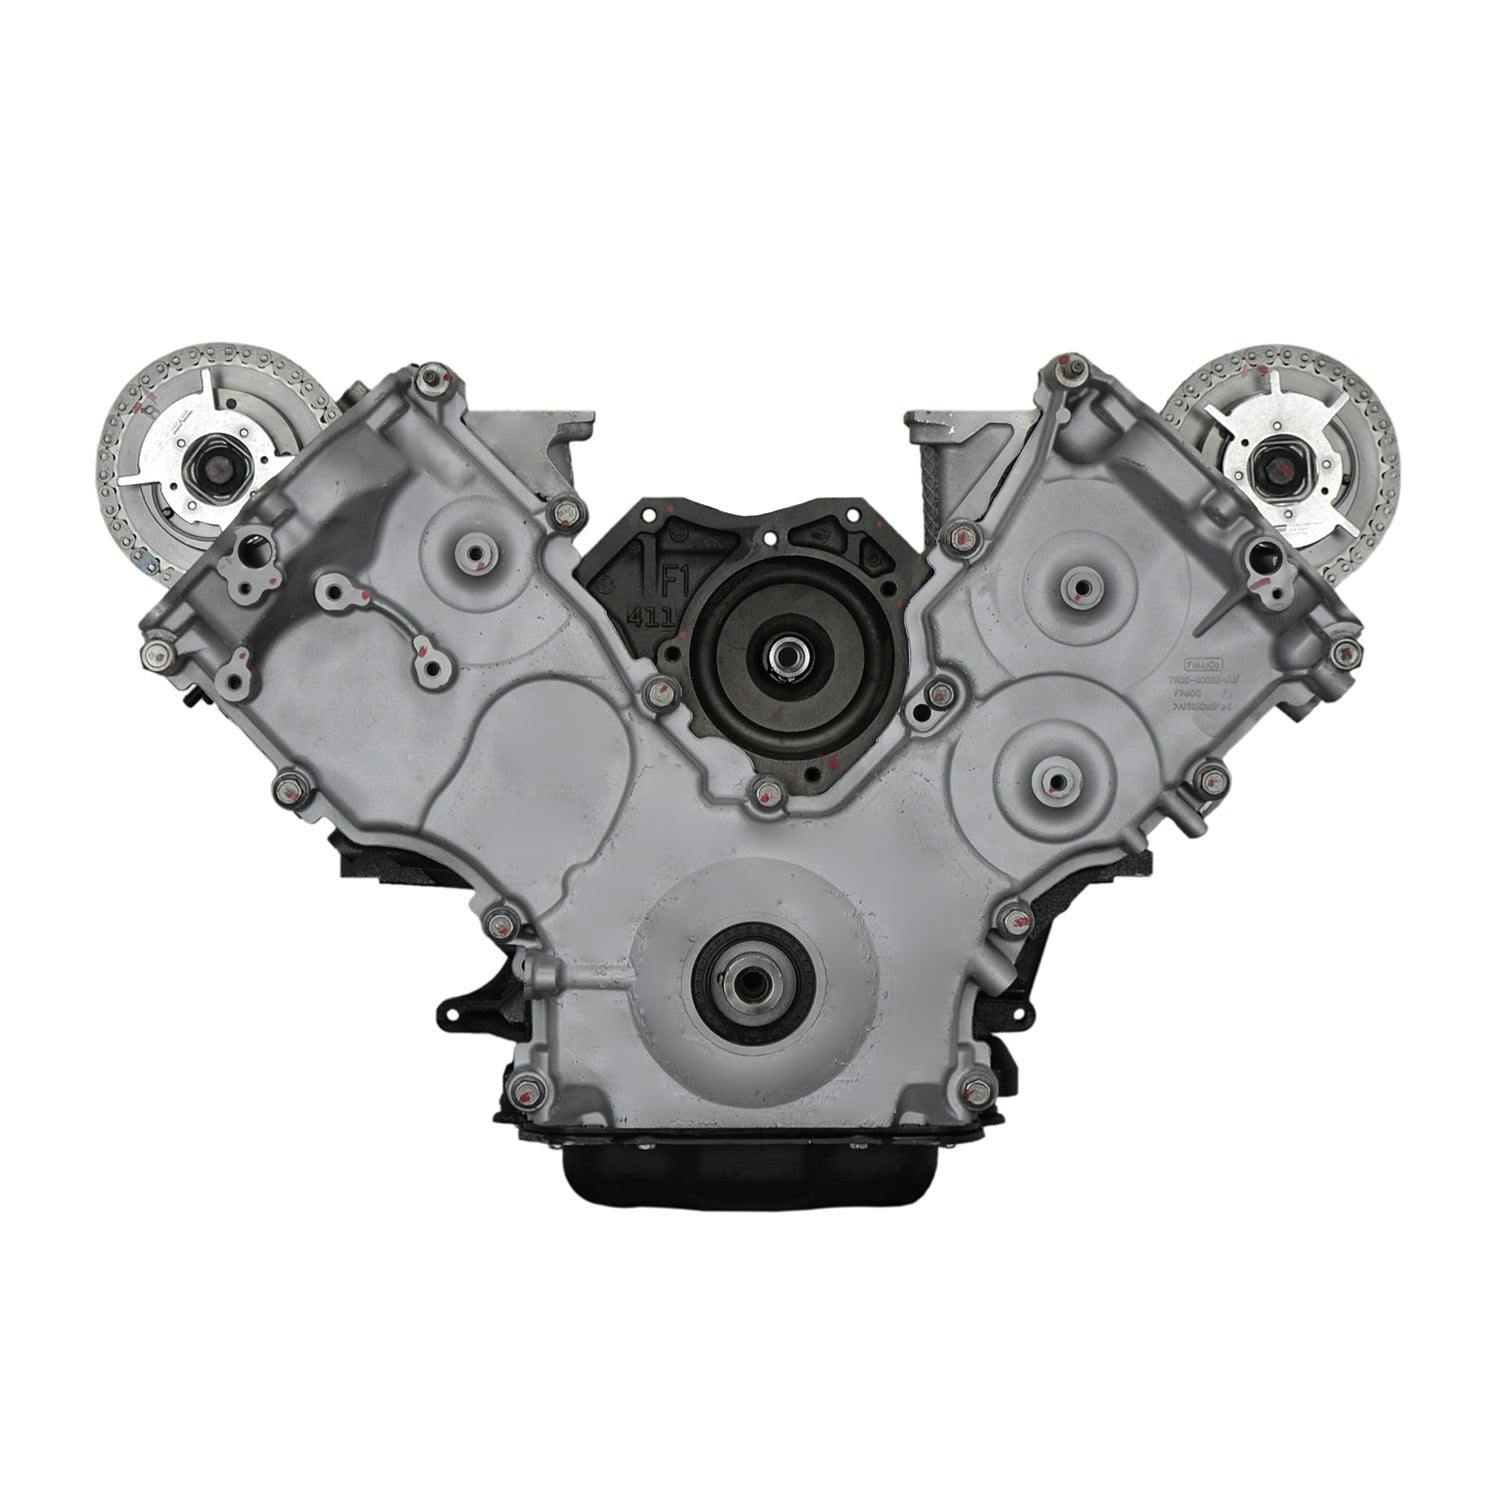 4.6L V8 Engine for 2009-2010 Ford Explorer, Explorer Sport Trac, F-150/Mercury Mountaineer